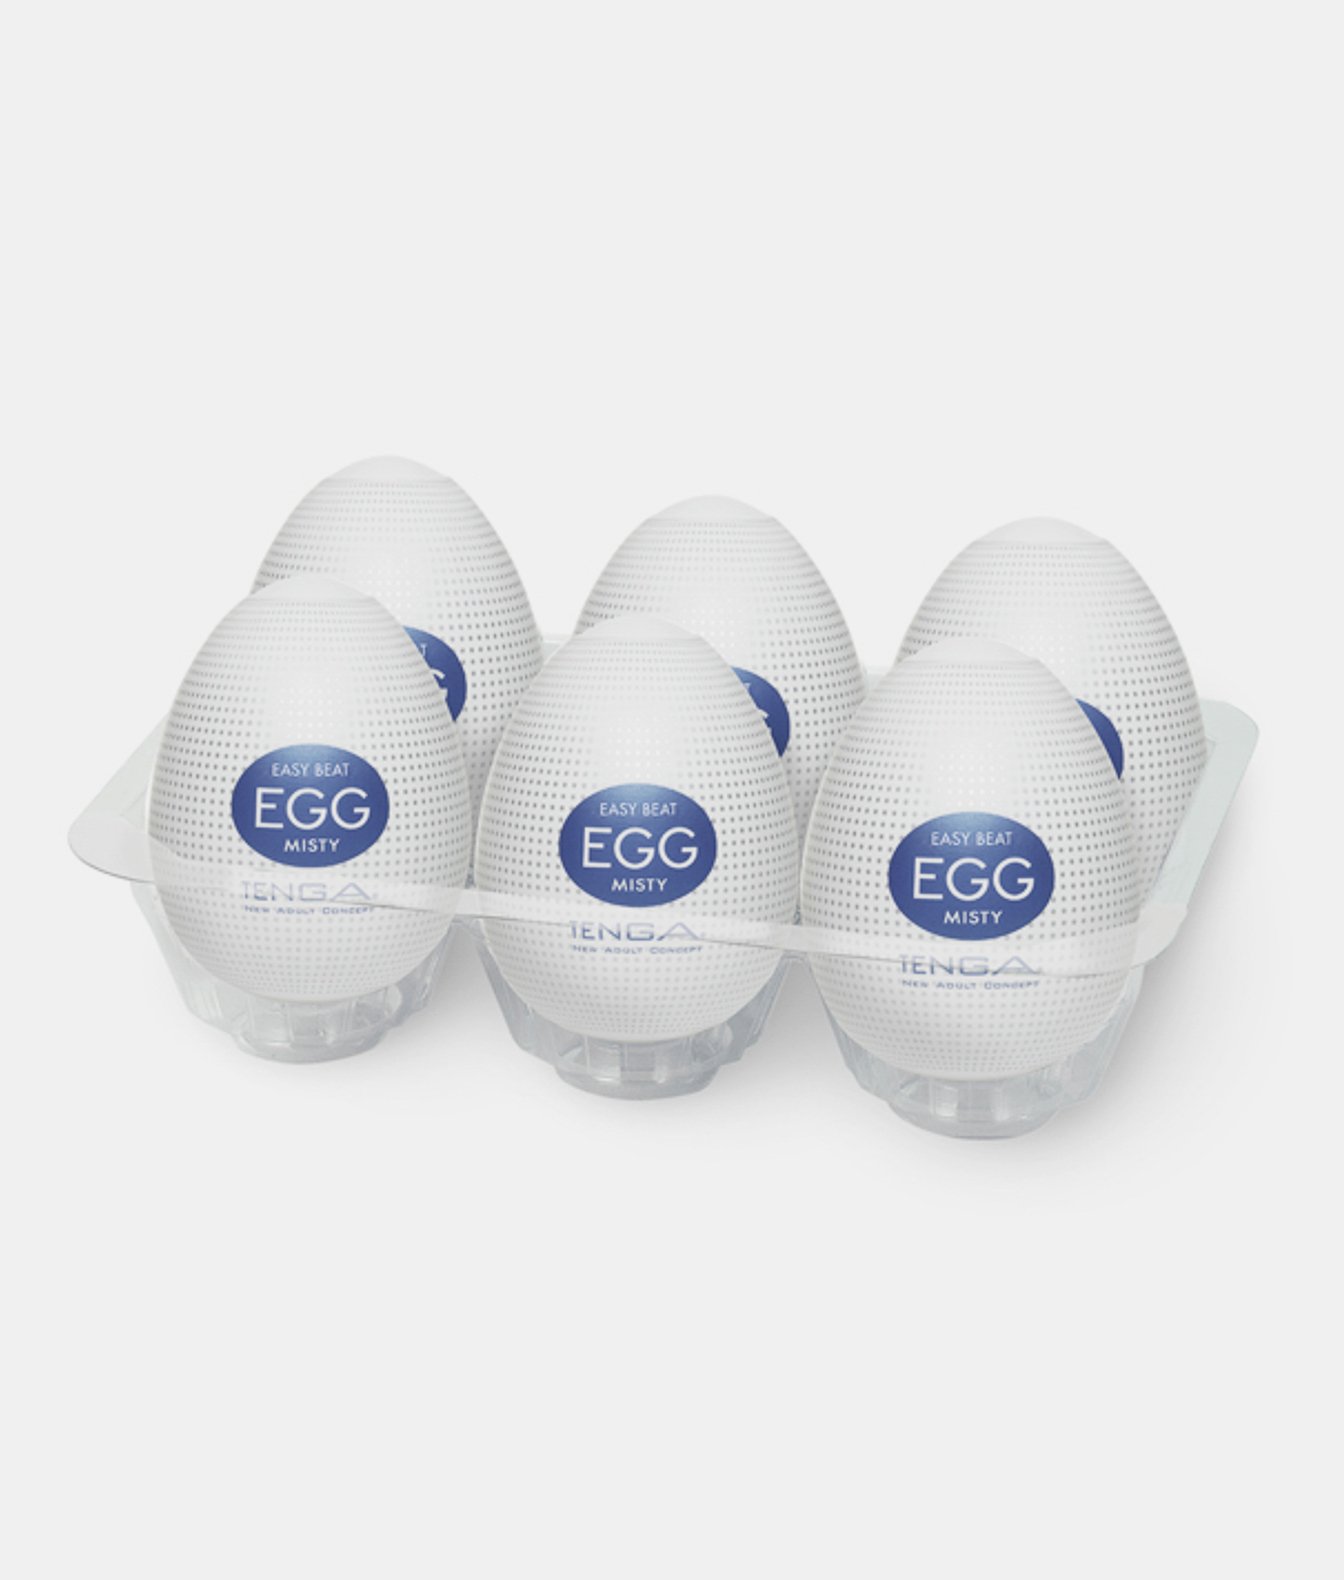 TENGA Easy ONA-CAP Egg Misty